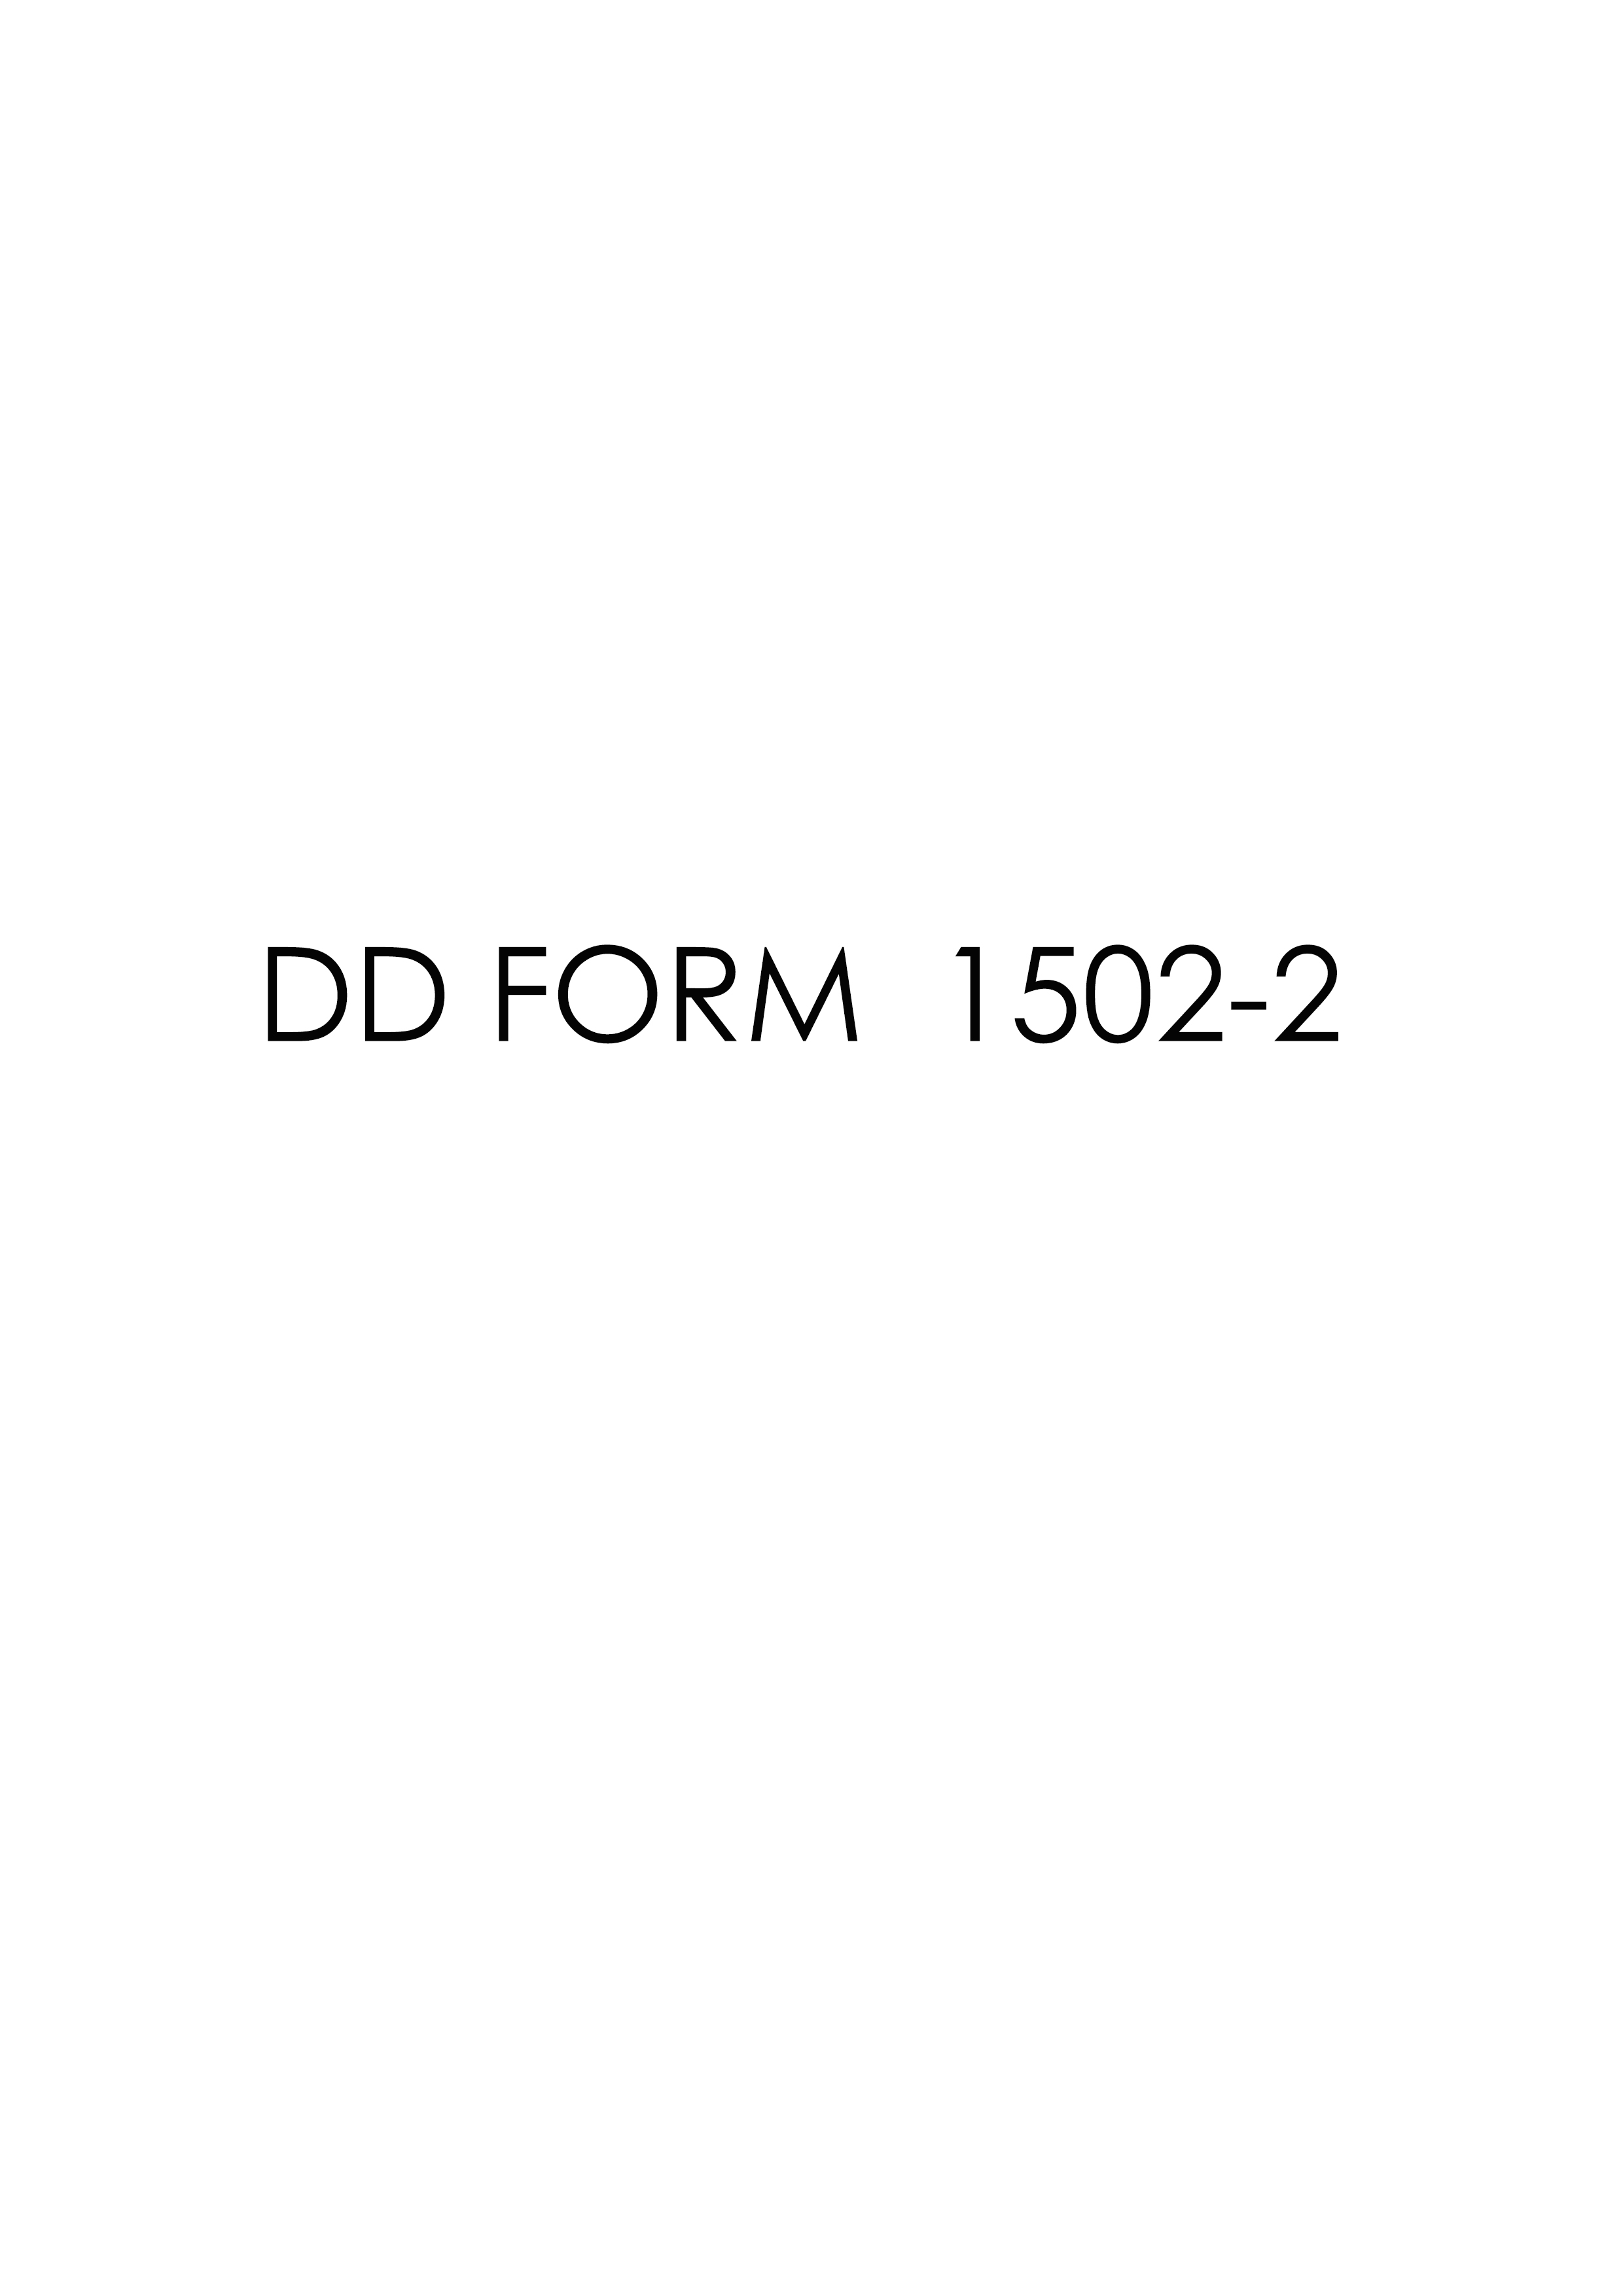 Download dd 1502-2 Form